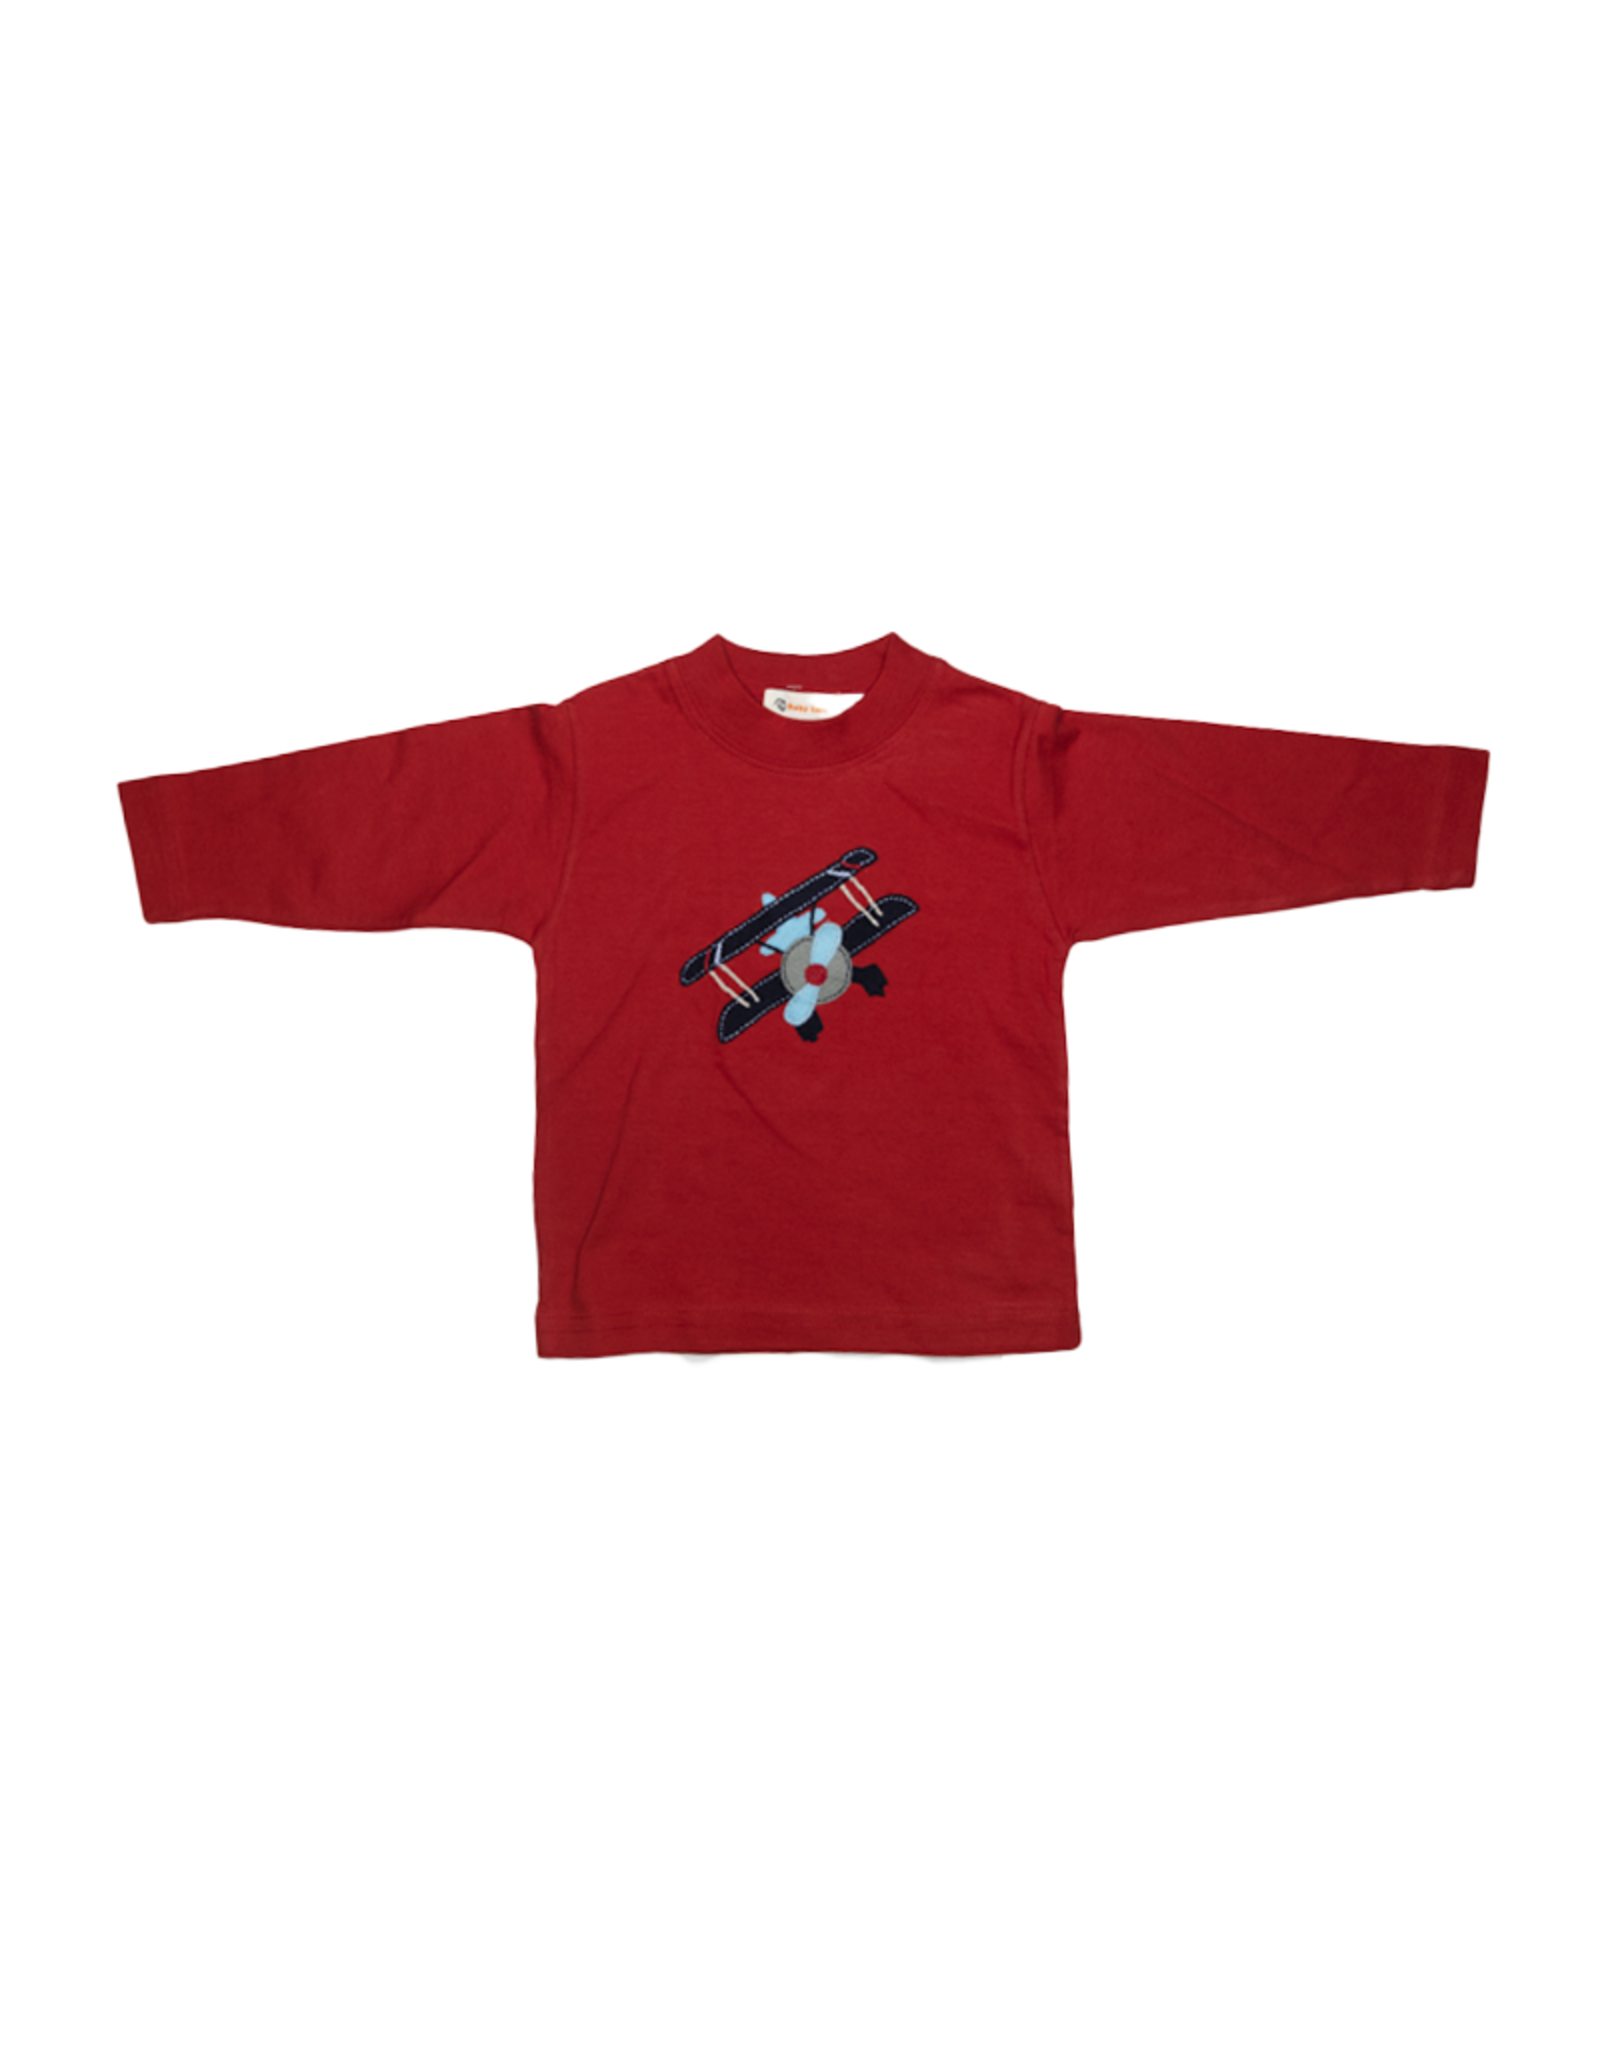 Luigi F21 Boy Shirt Red Biplane